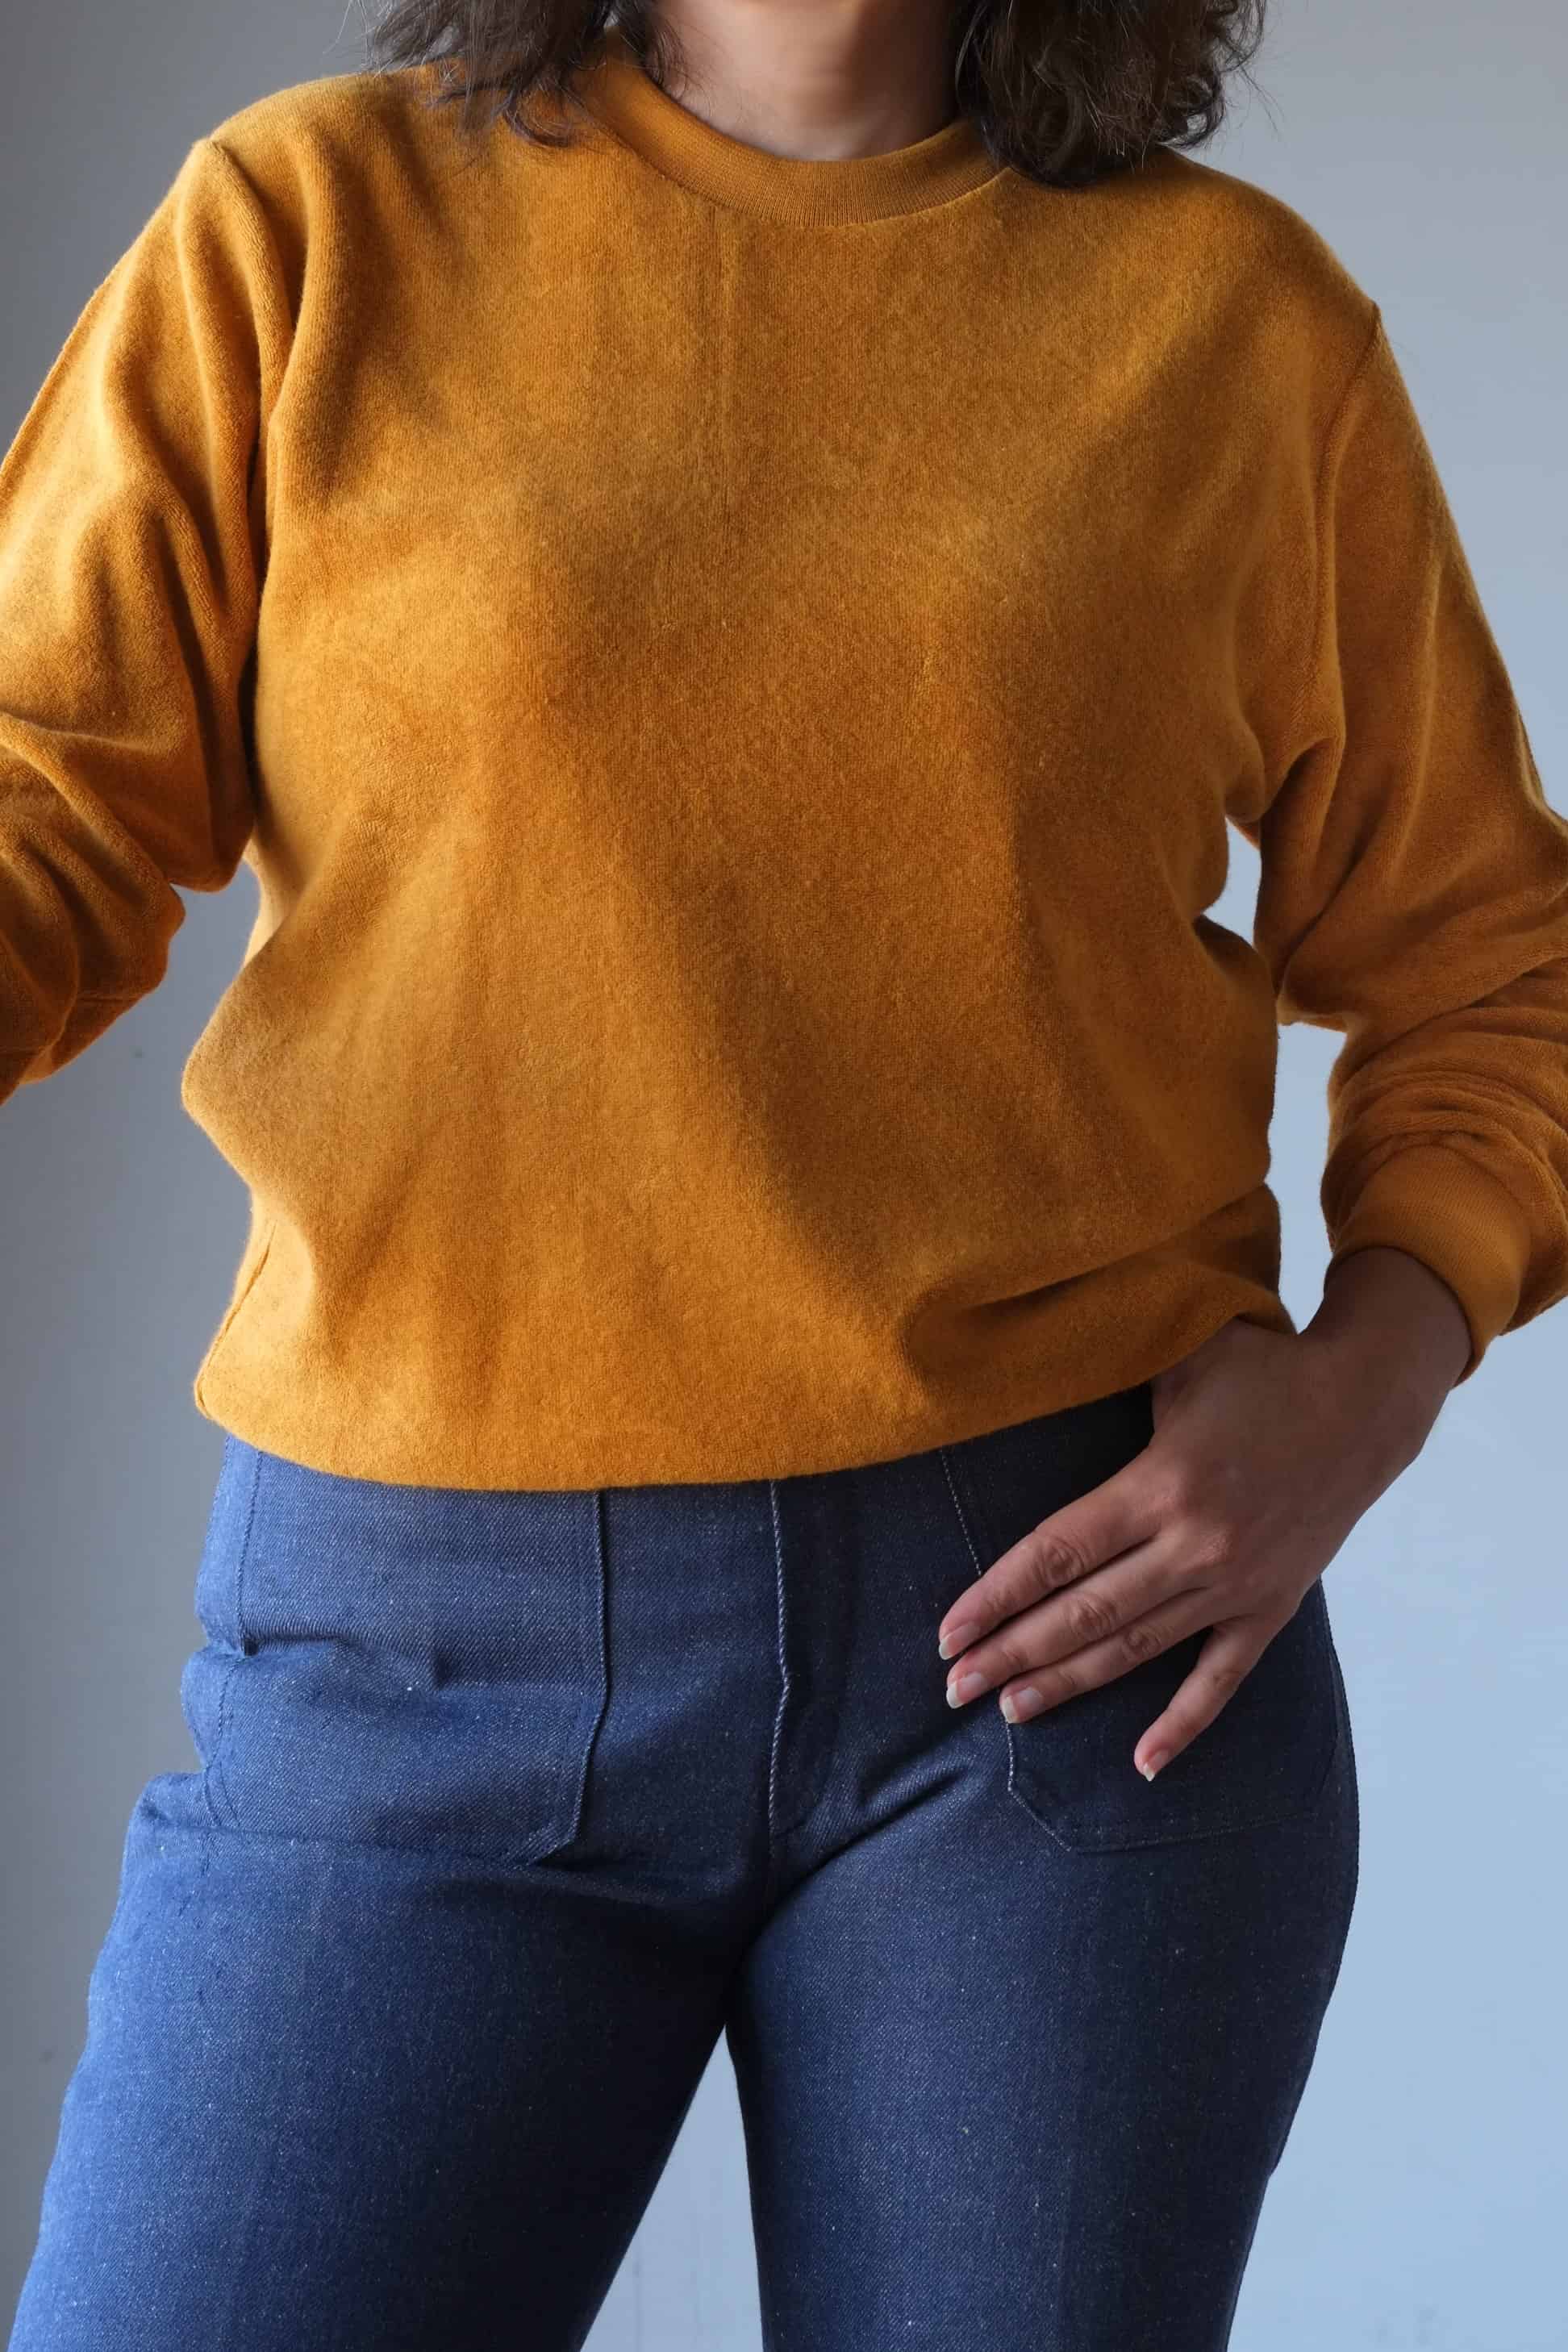 RESTOSANA 80's Terry Cloth Sweatshirt cinnamon color on model